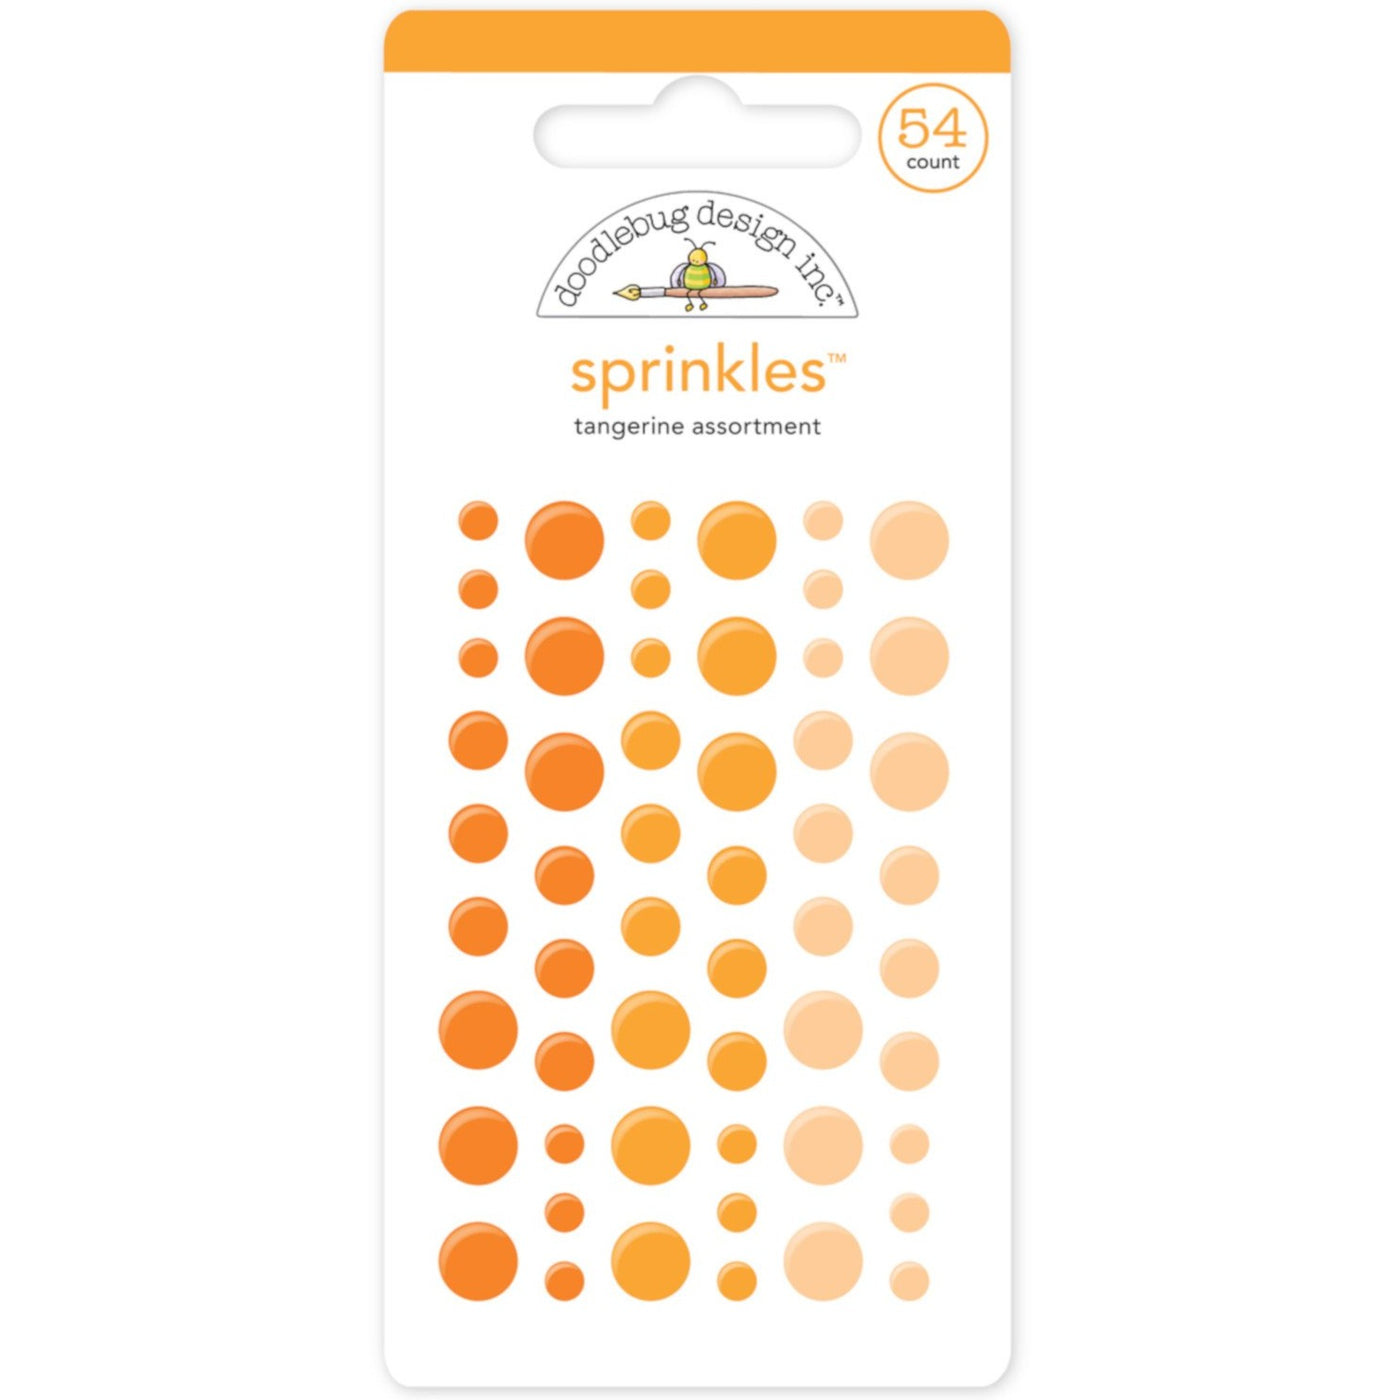 TANGERINE Sprinkles - 54 enamel dots in 3 orange colors from Doodlebug Design